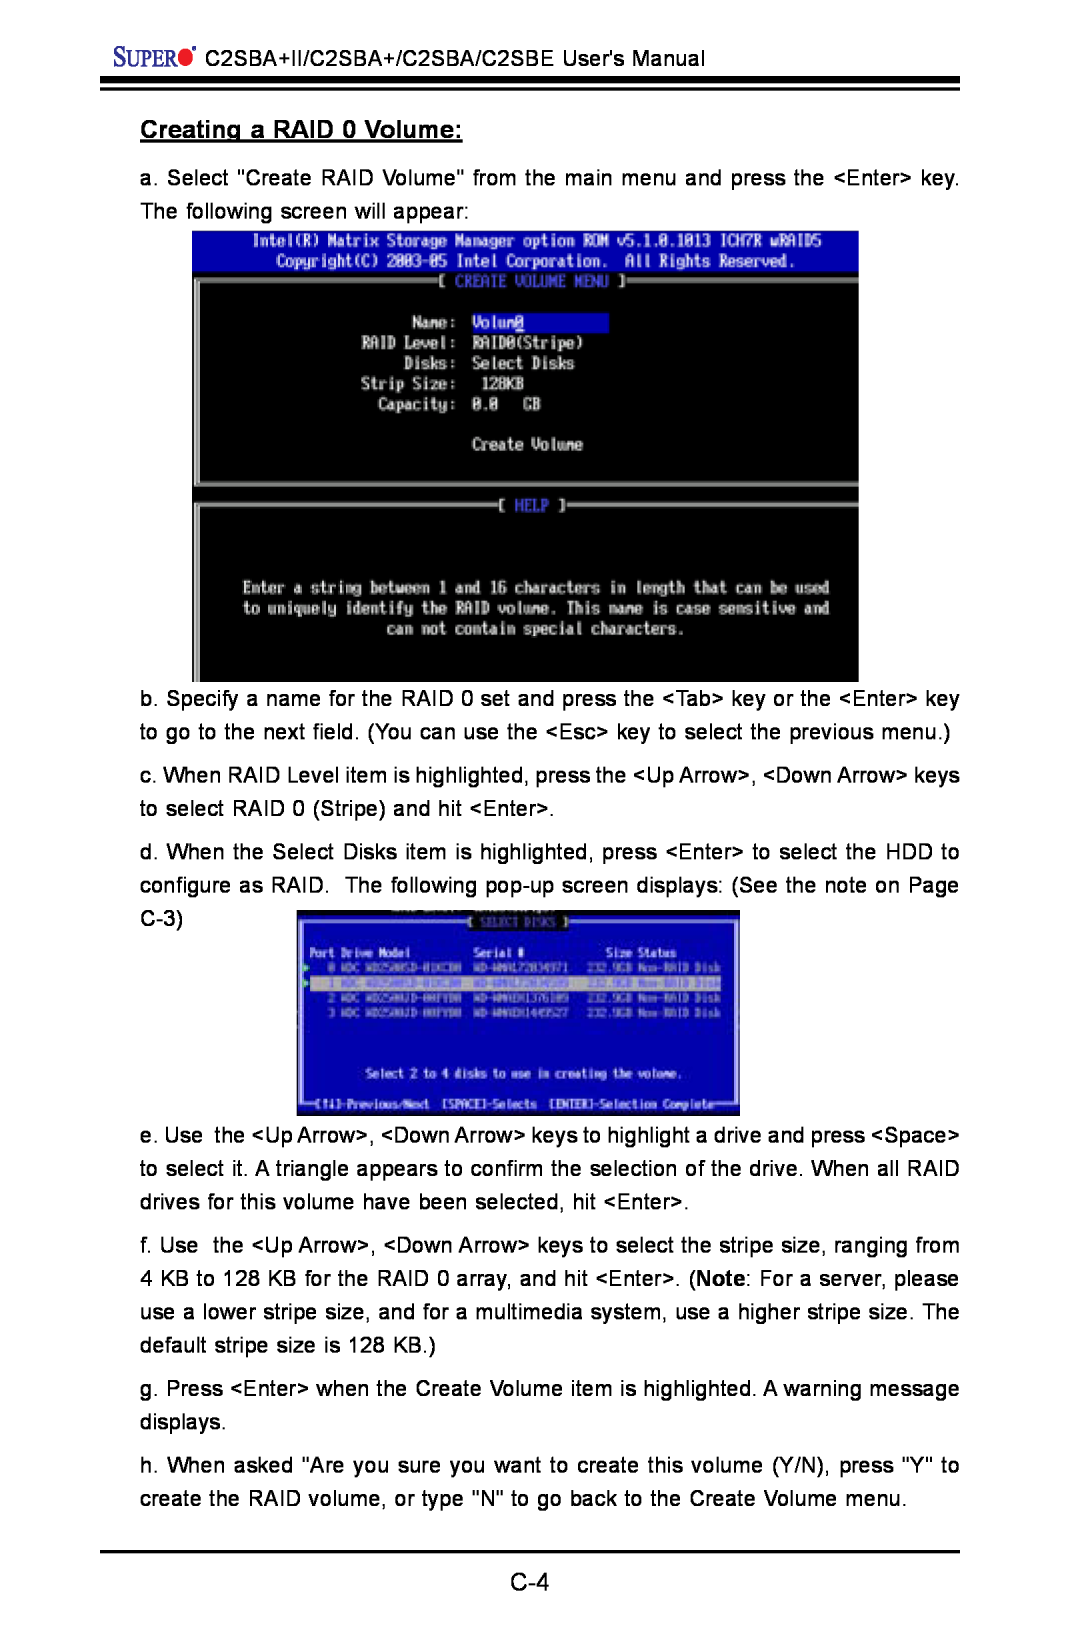 SUPER MICRO Computer C2SBA+II, C2SBE user manual Creating a RAID 0 Volume 